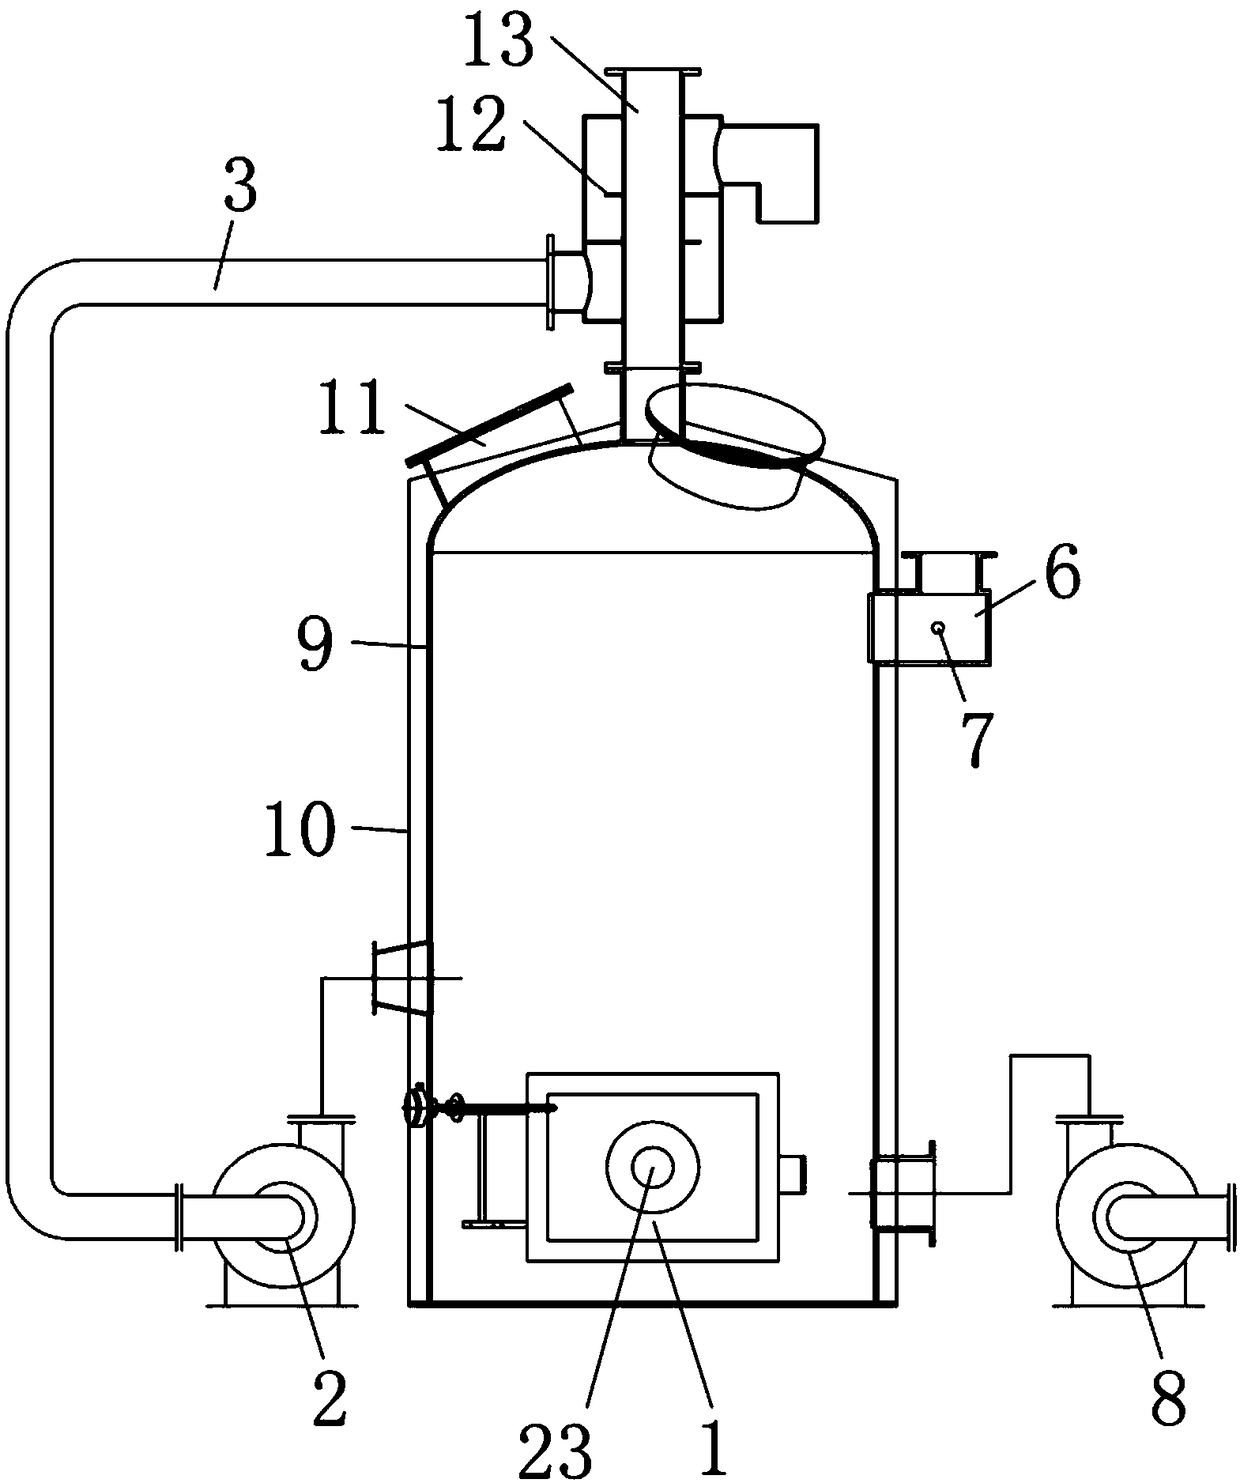 Desorption regeneration device suitable for organic exhaust gas treatment